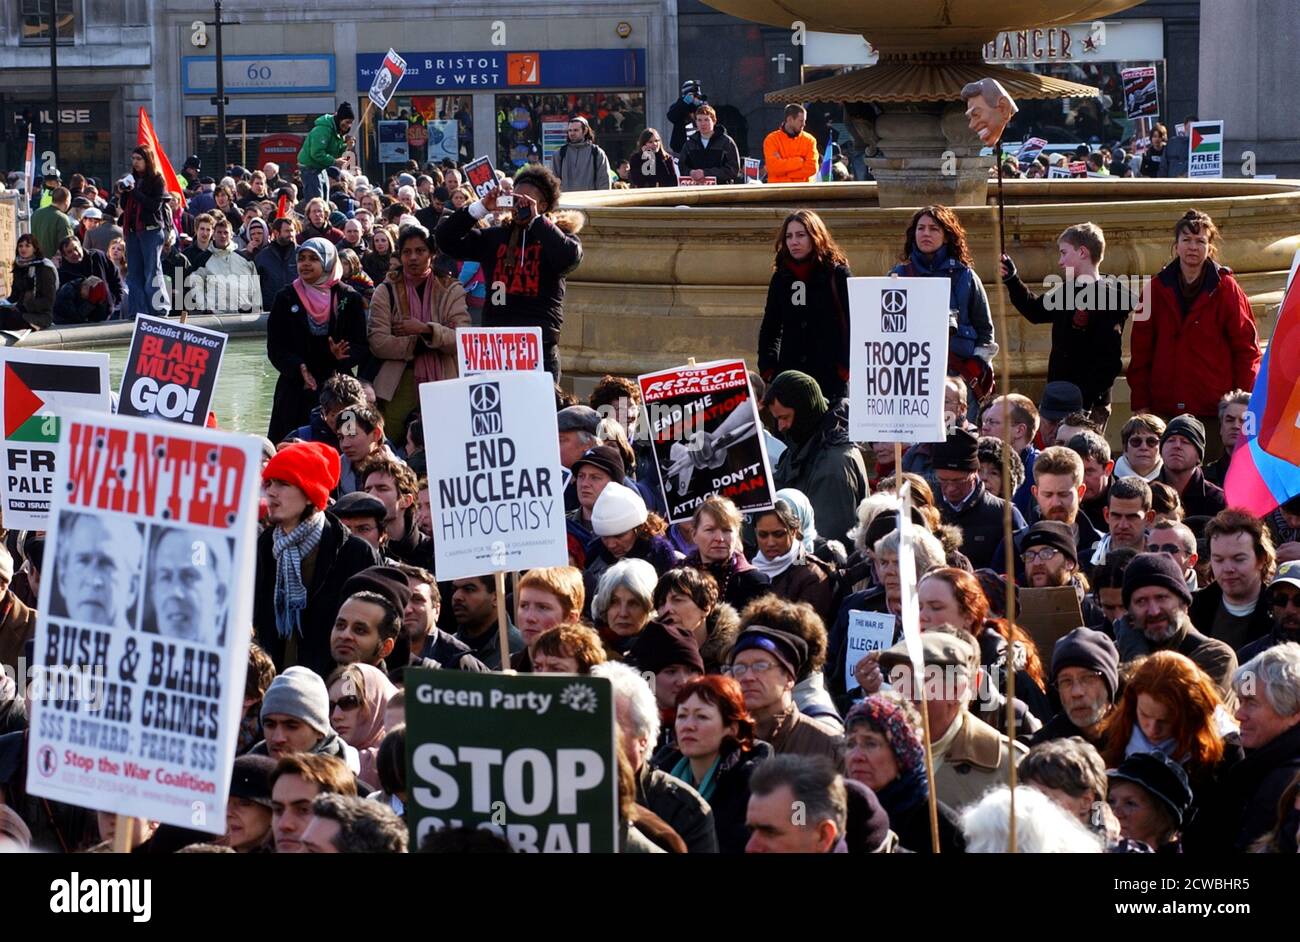 Photograph taken during an anti-Iraq War rally in 2003 Stock Photo